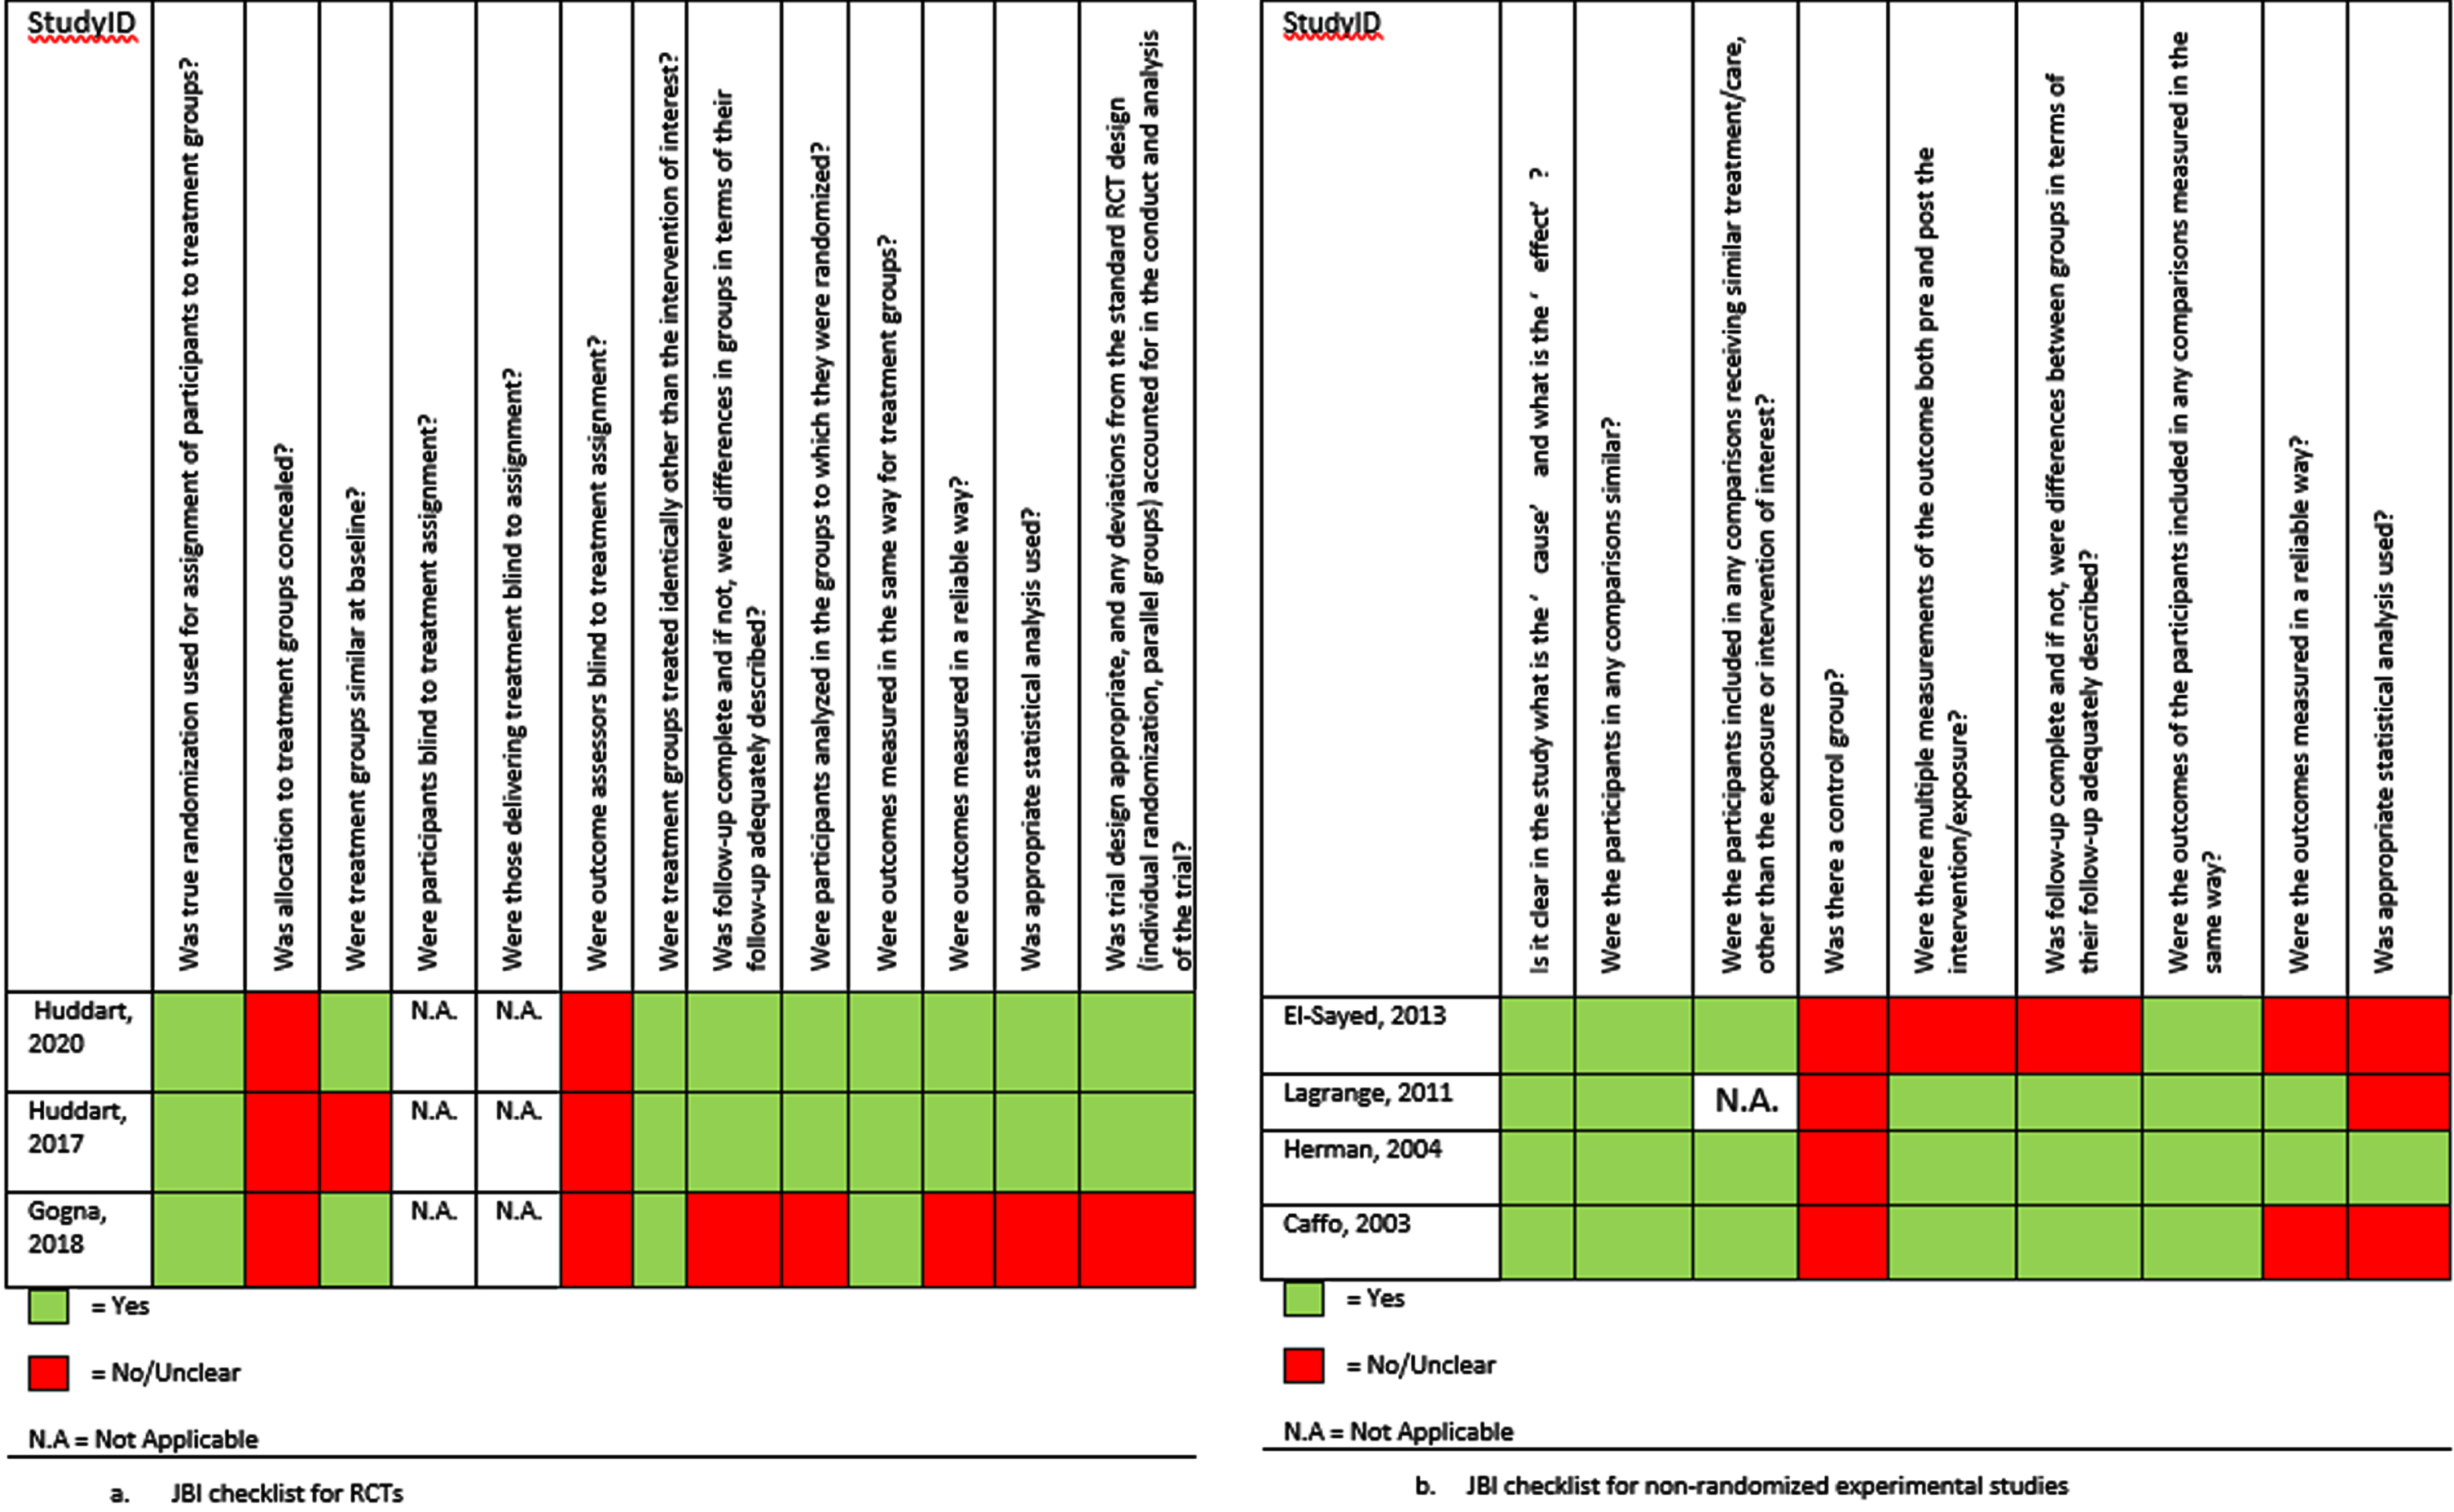 Critical appraisal of prospective studies using the JBI checklists.